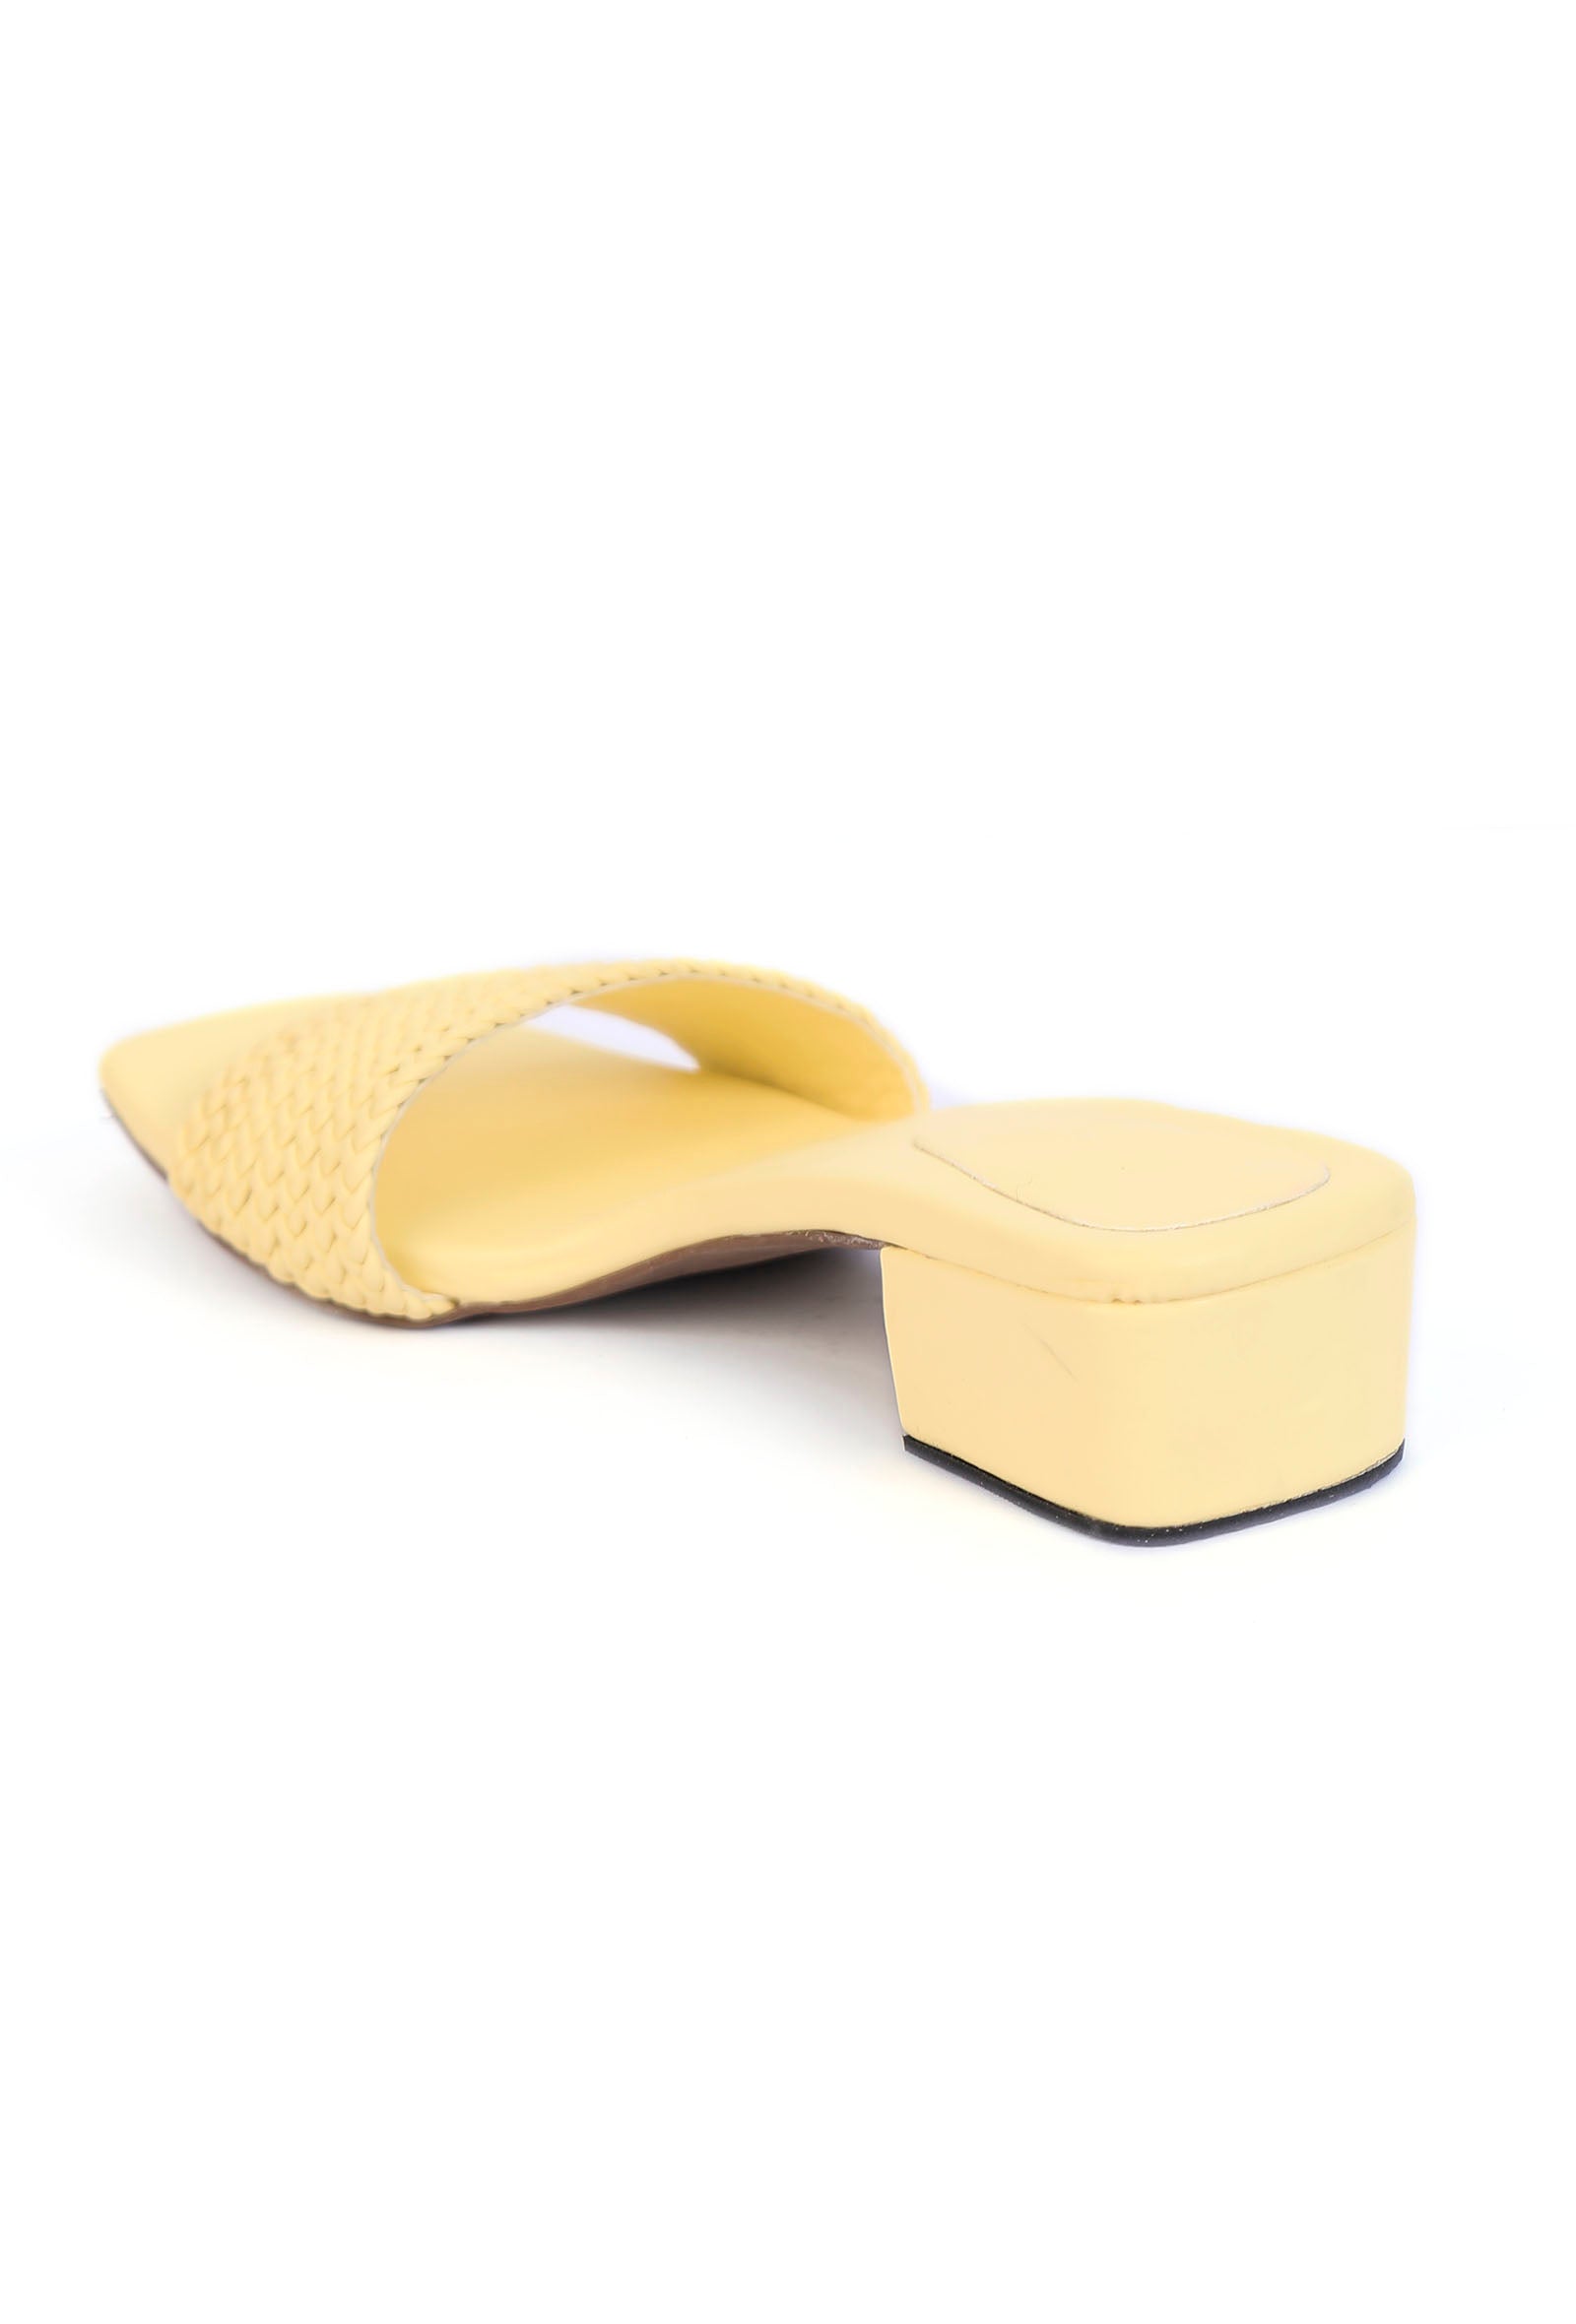 JustFab High Heels Size 8.5 Reyna Lemon Themed yellow And White Shoes |  Heels, High heels, White shoes